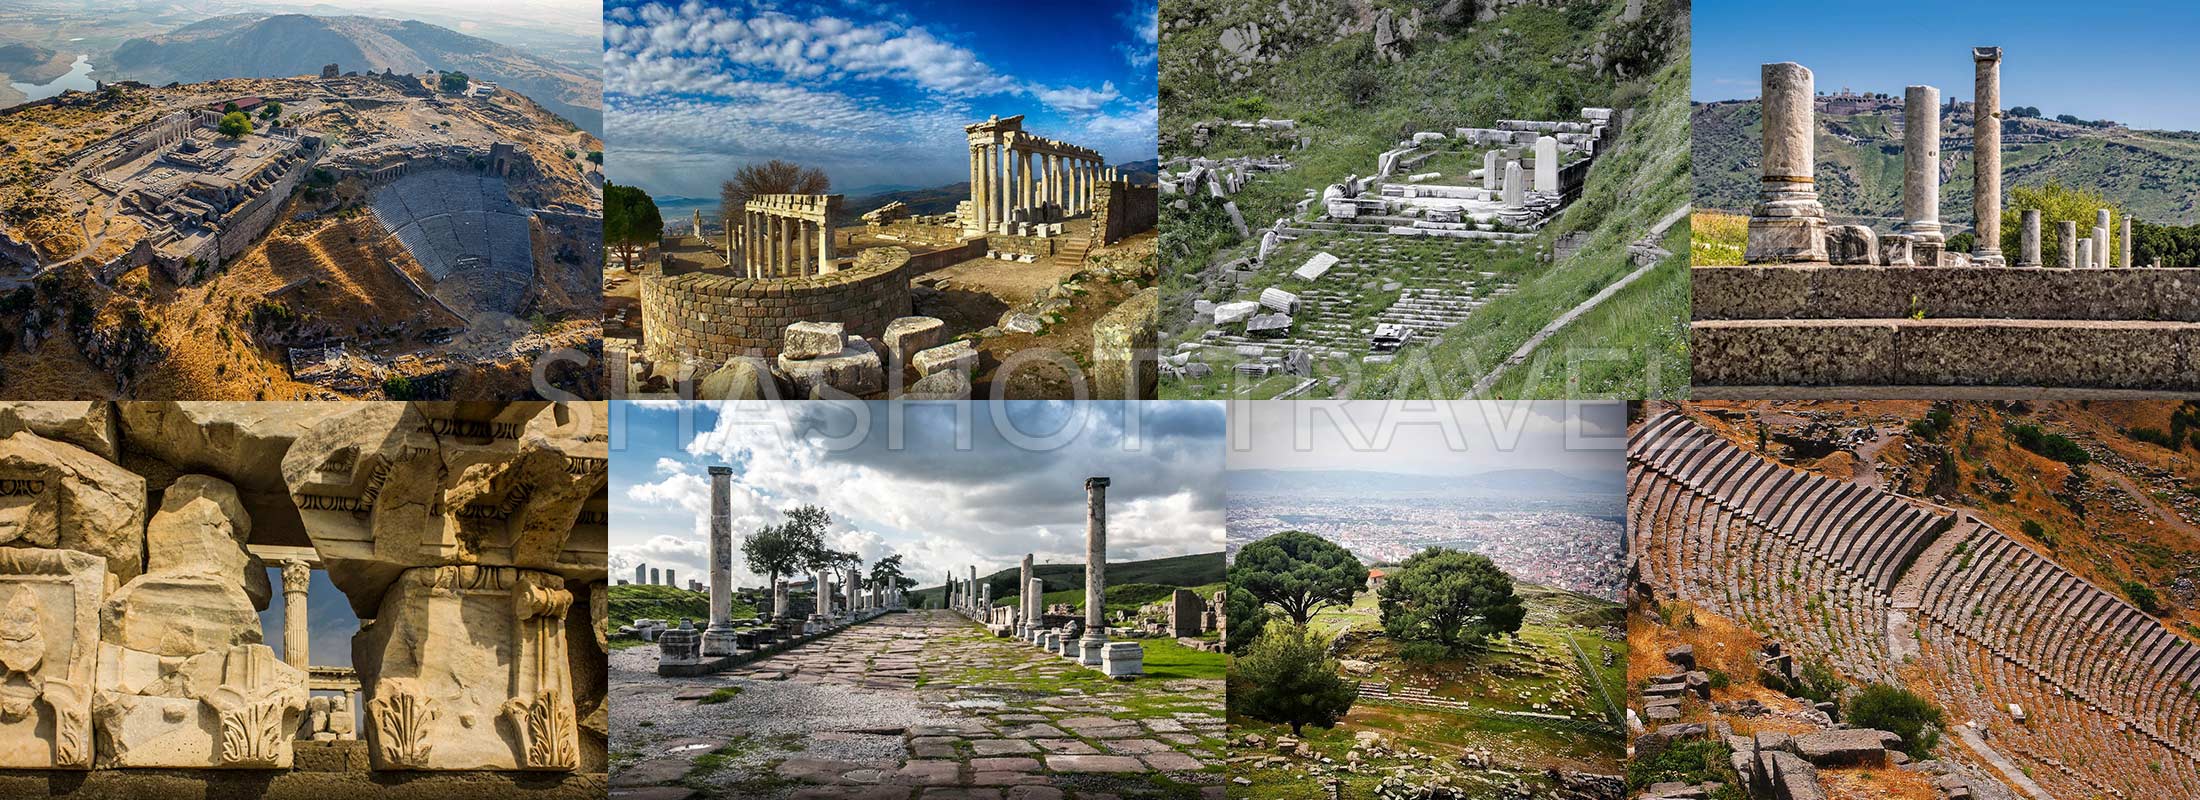 Pergamon Ancient Site Tours